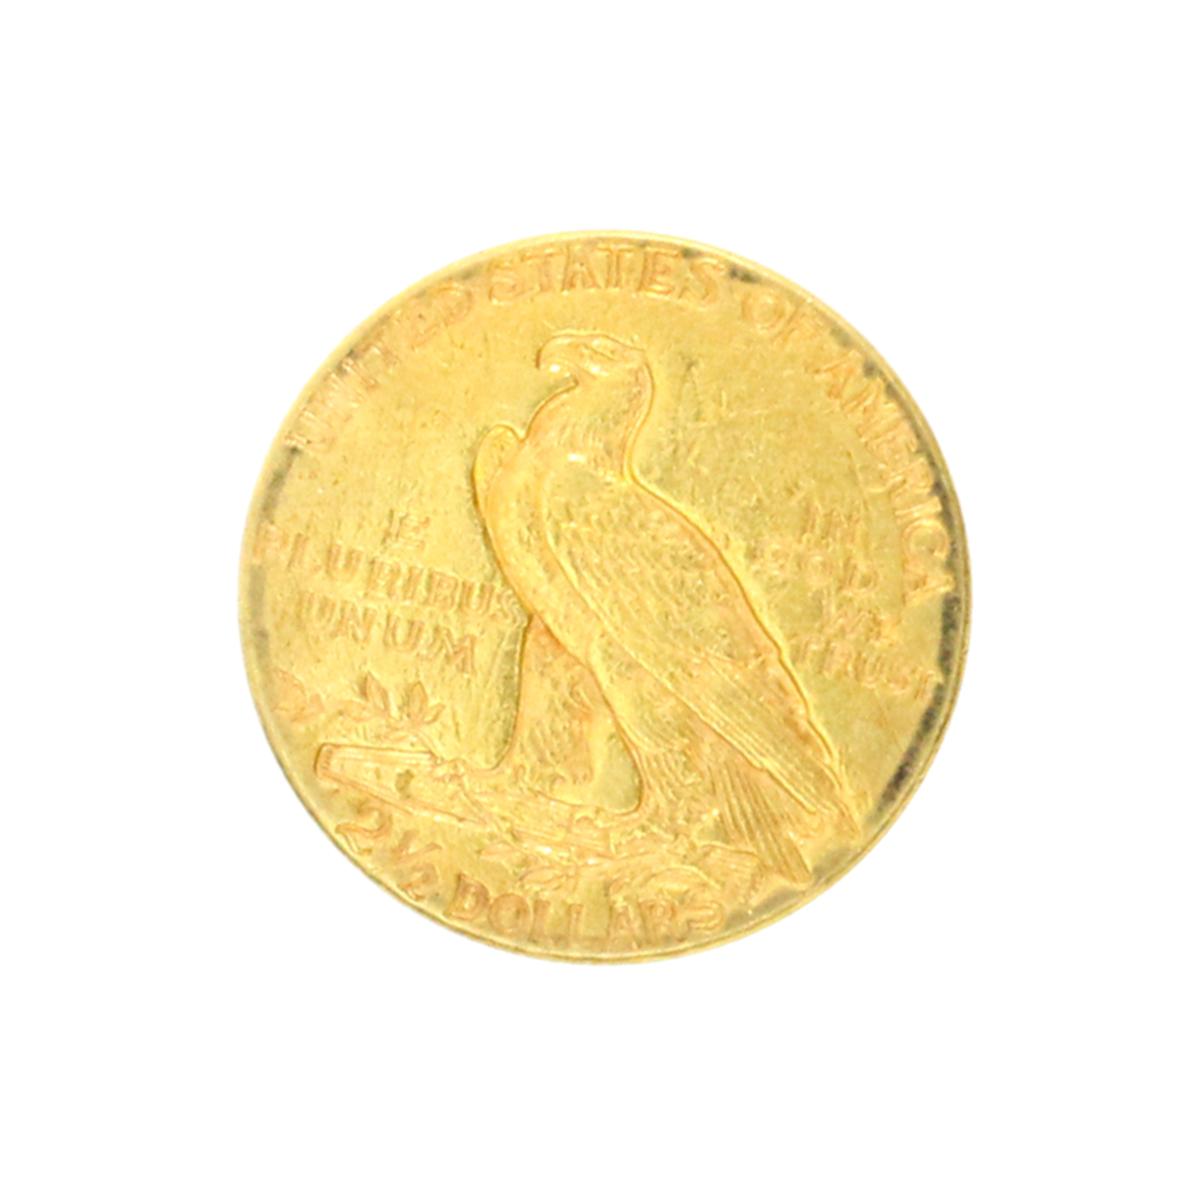 Rare 1926 $2.50 U.S. Indian Head Gold Coin